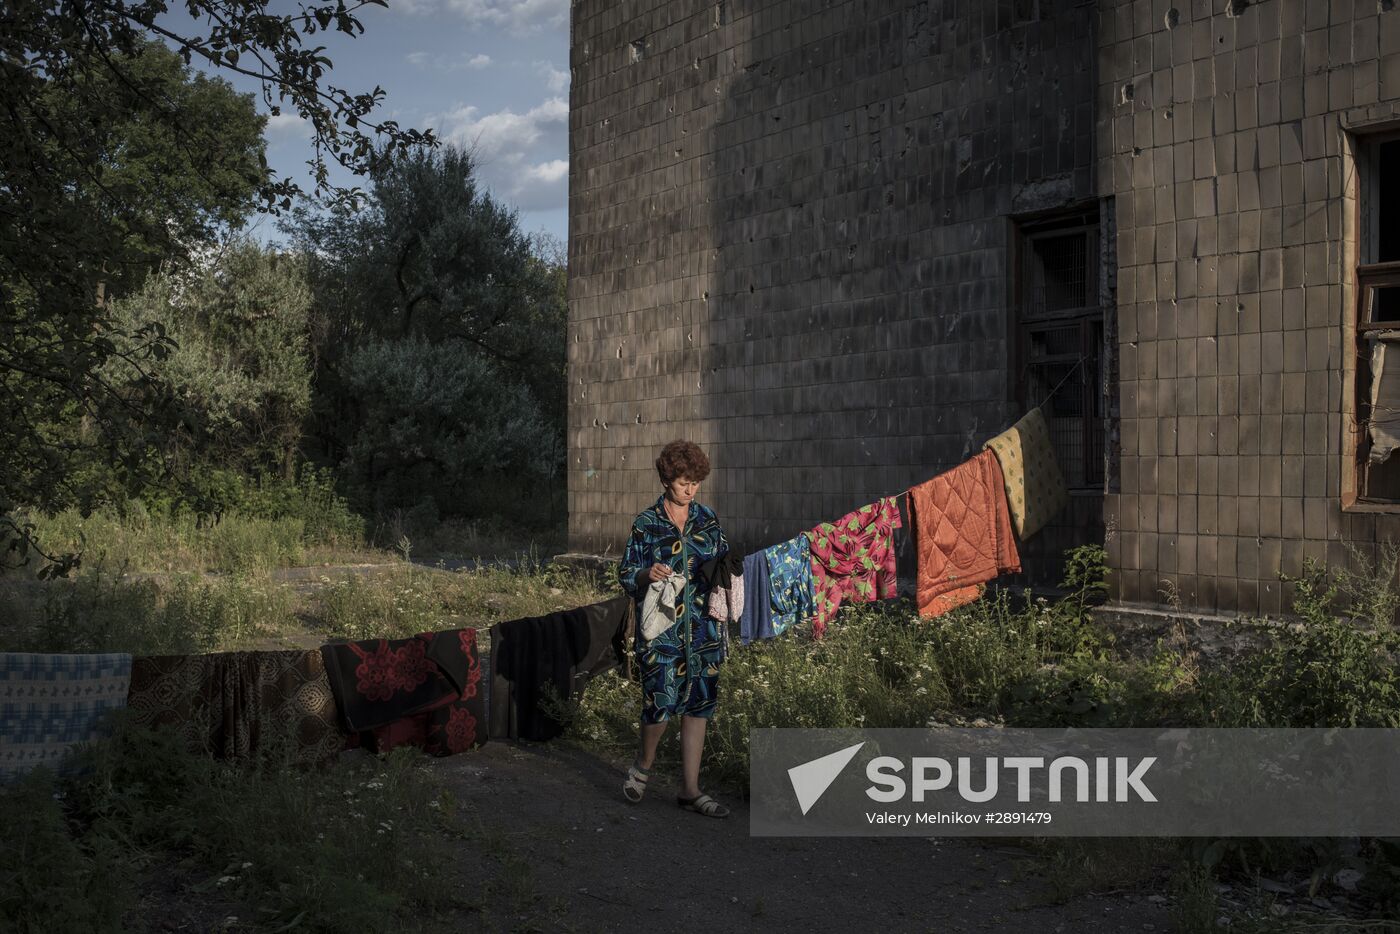 Abandoned school becomes shelter for Gorlovka residents